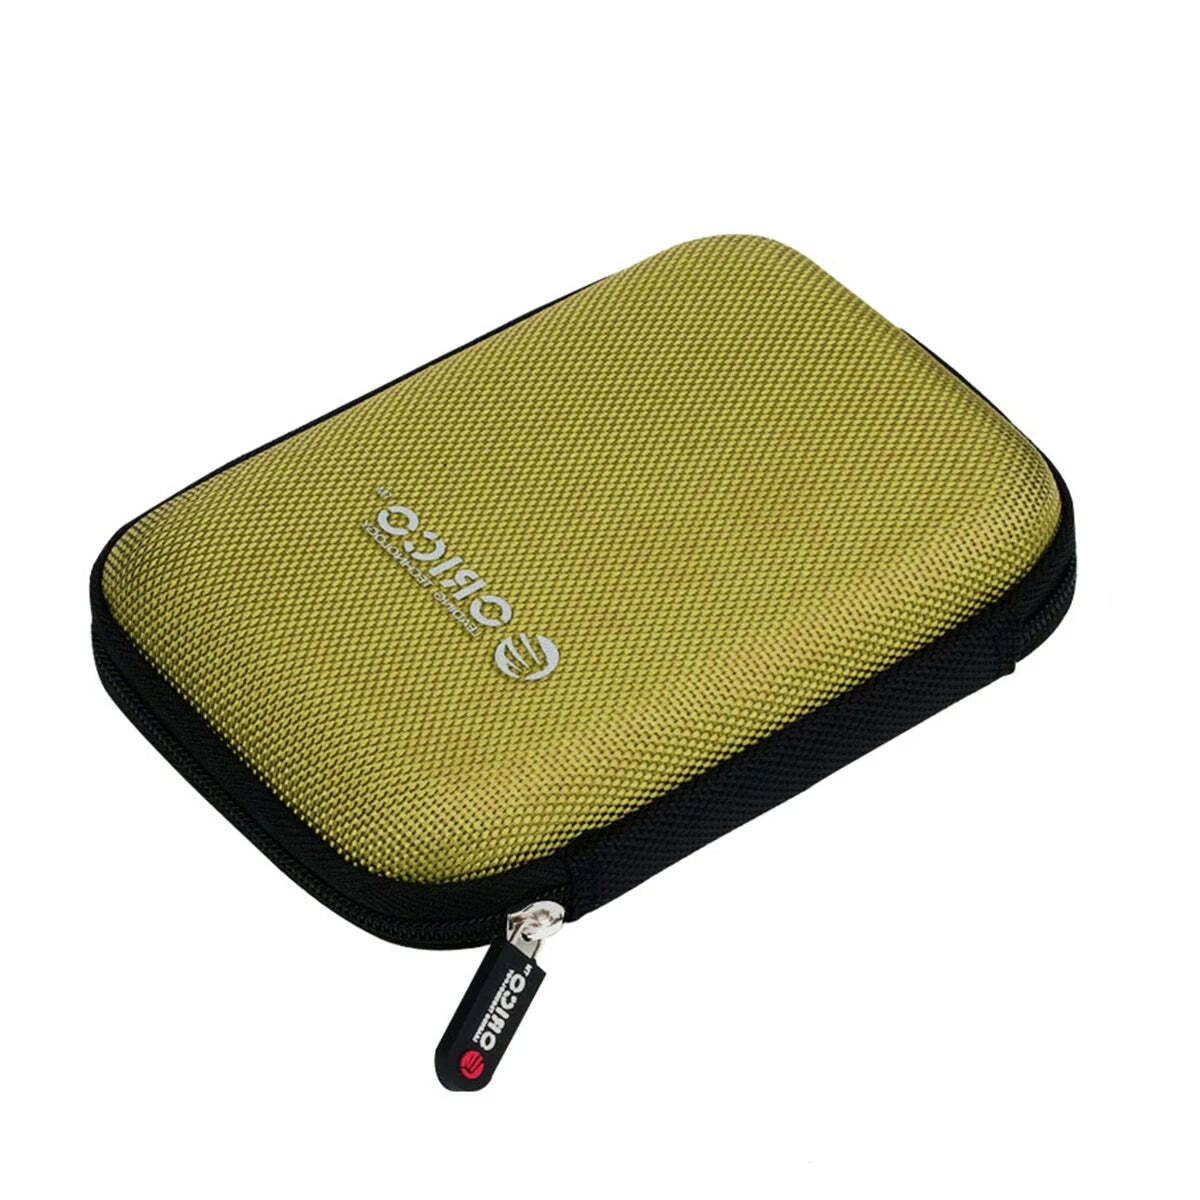 ORICO 2.5 Inch HDD Box Bag Case Portable Hard Drive Bag for External